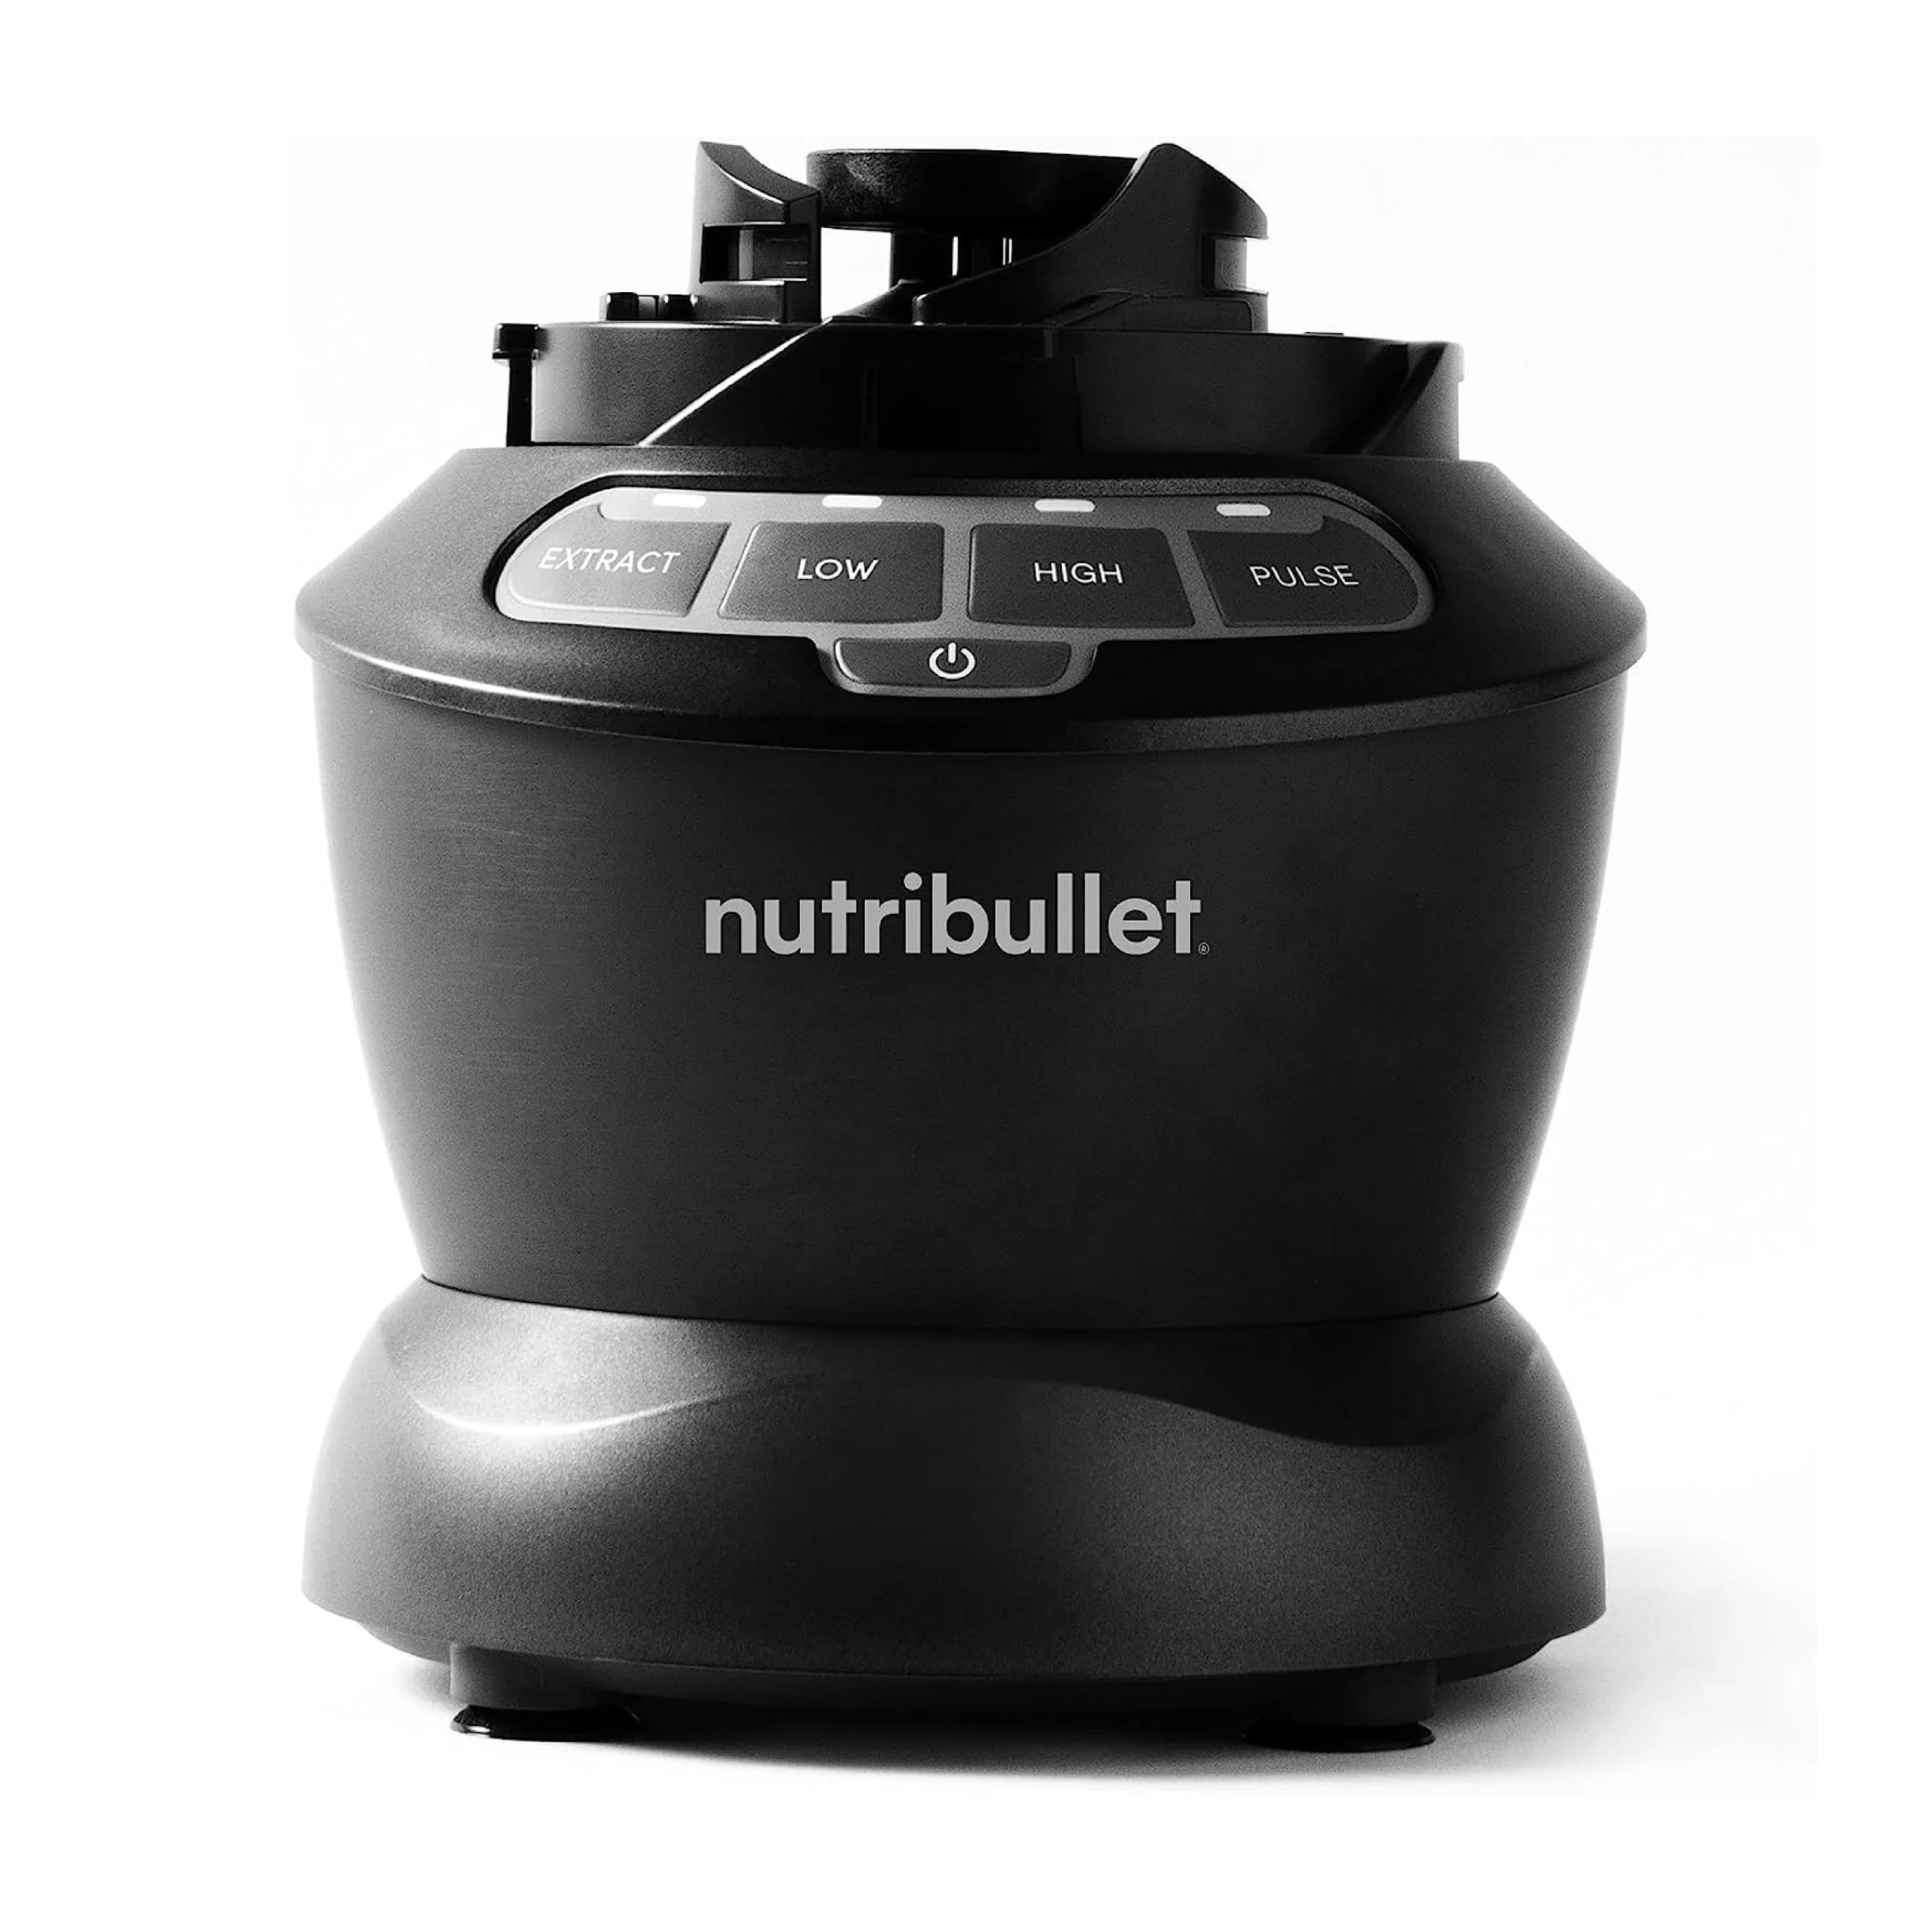 nutribullet 56 oz. Blender Combo with Single Serve Cups, 1000W 